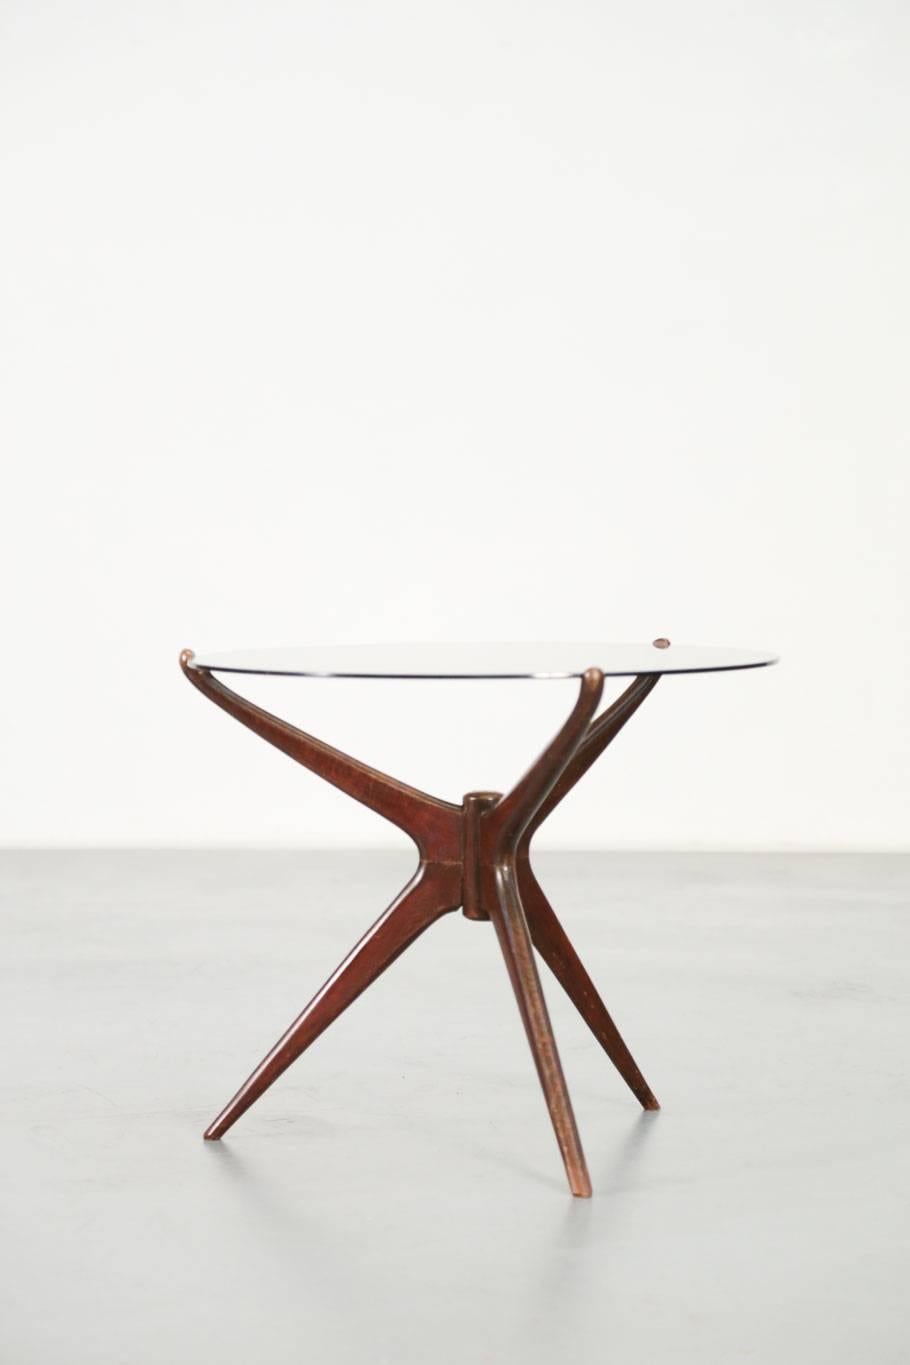 Rare spider coffee table in the style of Italian designer Gio Ponti.